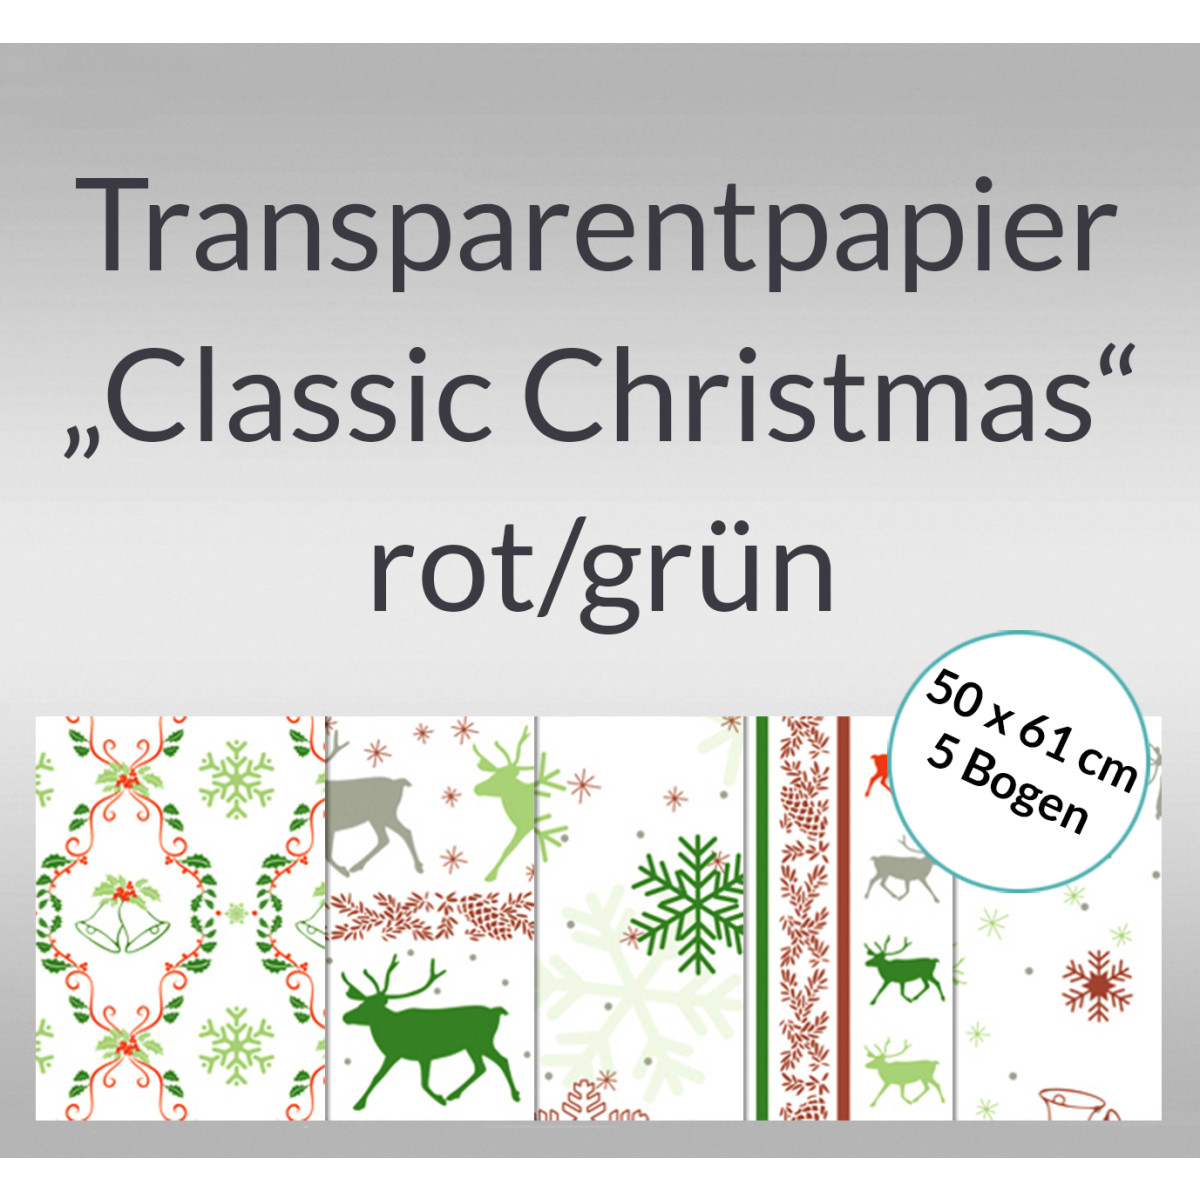 Transparentpapier "Classic Christmas" rot/grün 50 x 61 cm - 5 Bogen